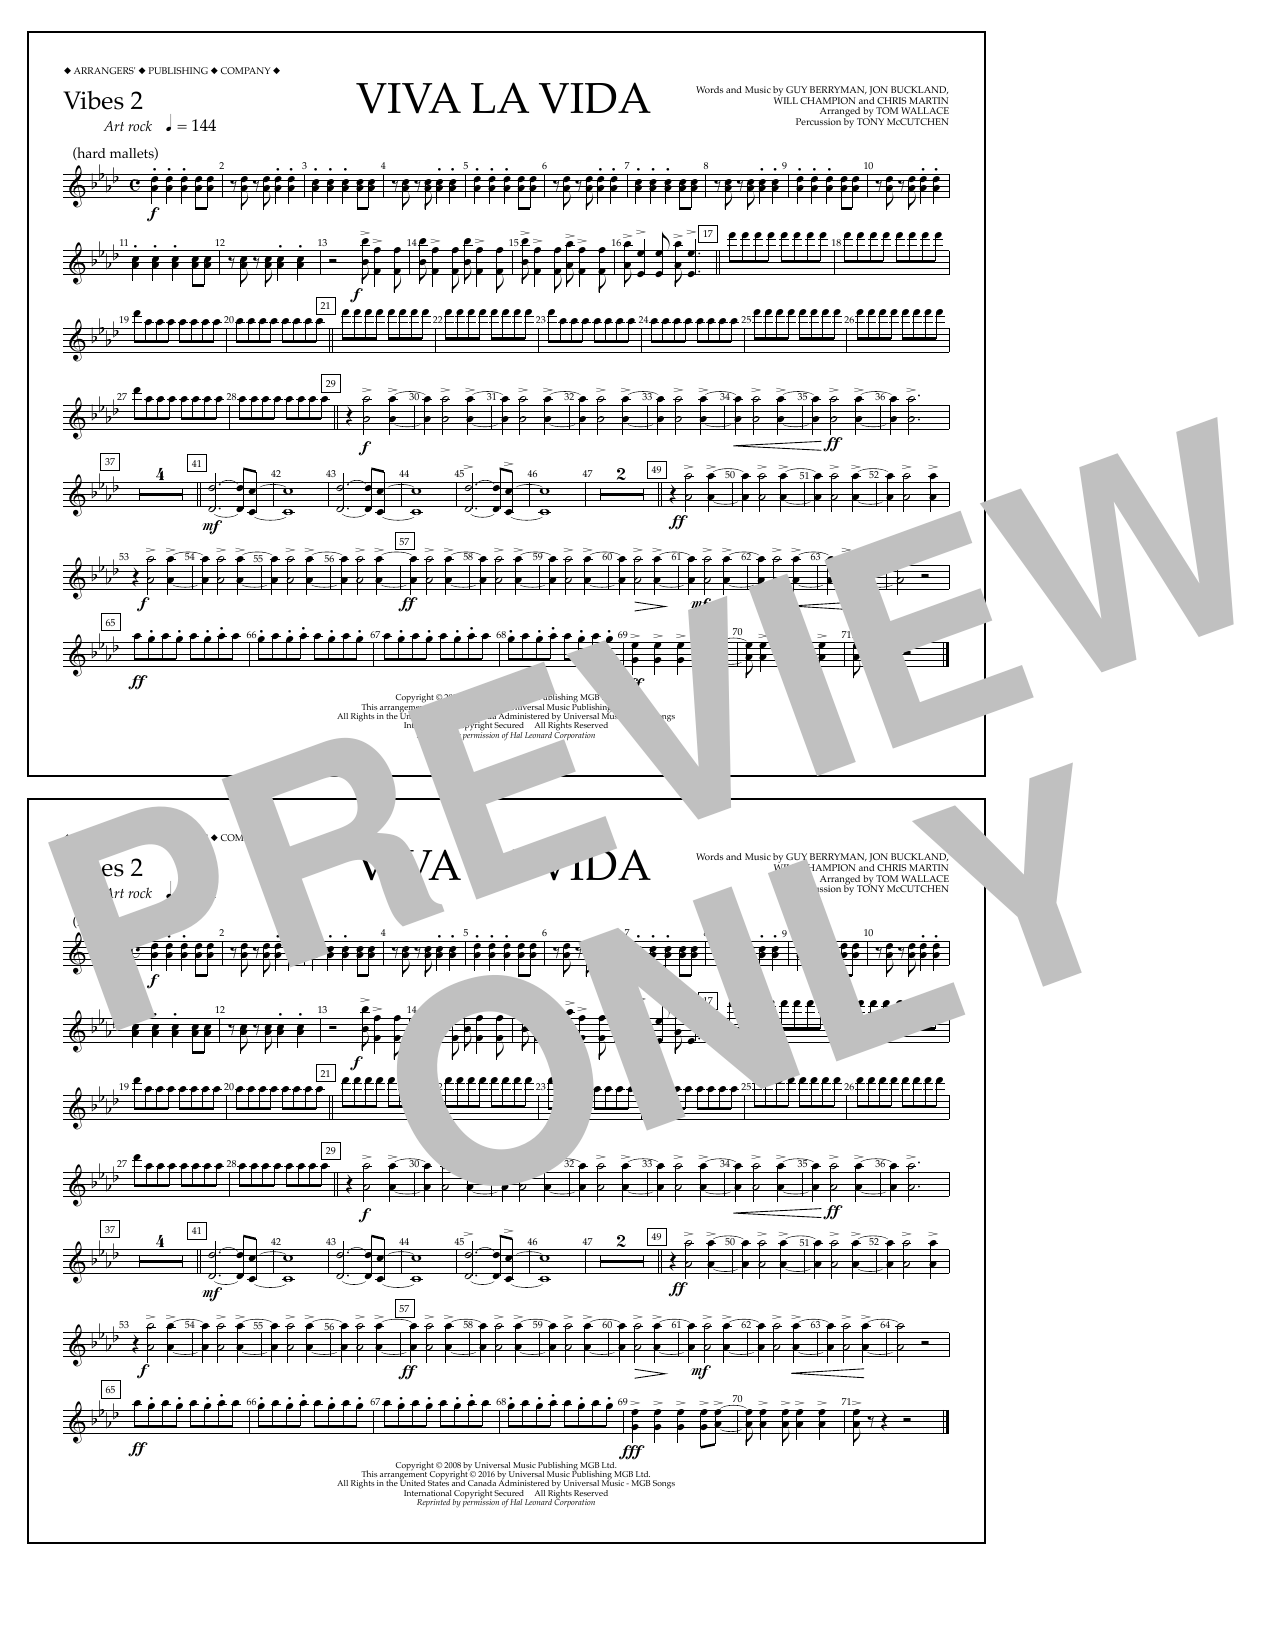 Tom Wallace Viva La Vida - Vibes 2 Sheet Music Notes & Chords for Marching Band - Download or Print PDF